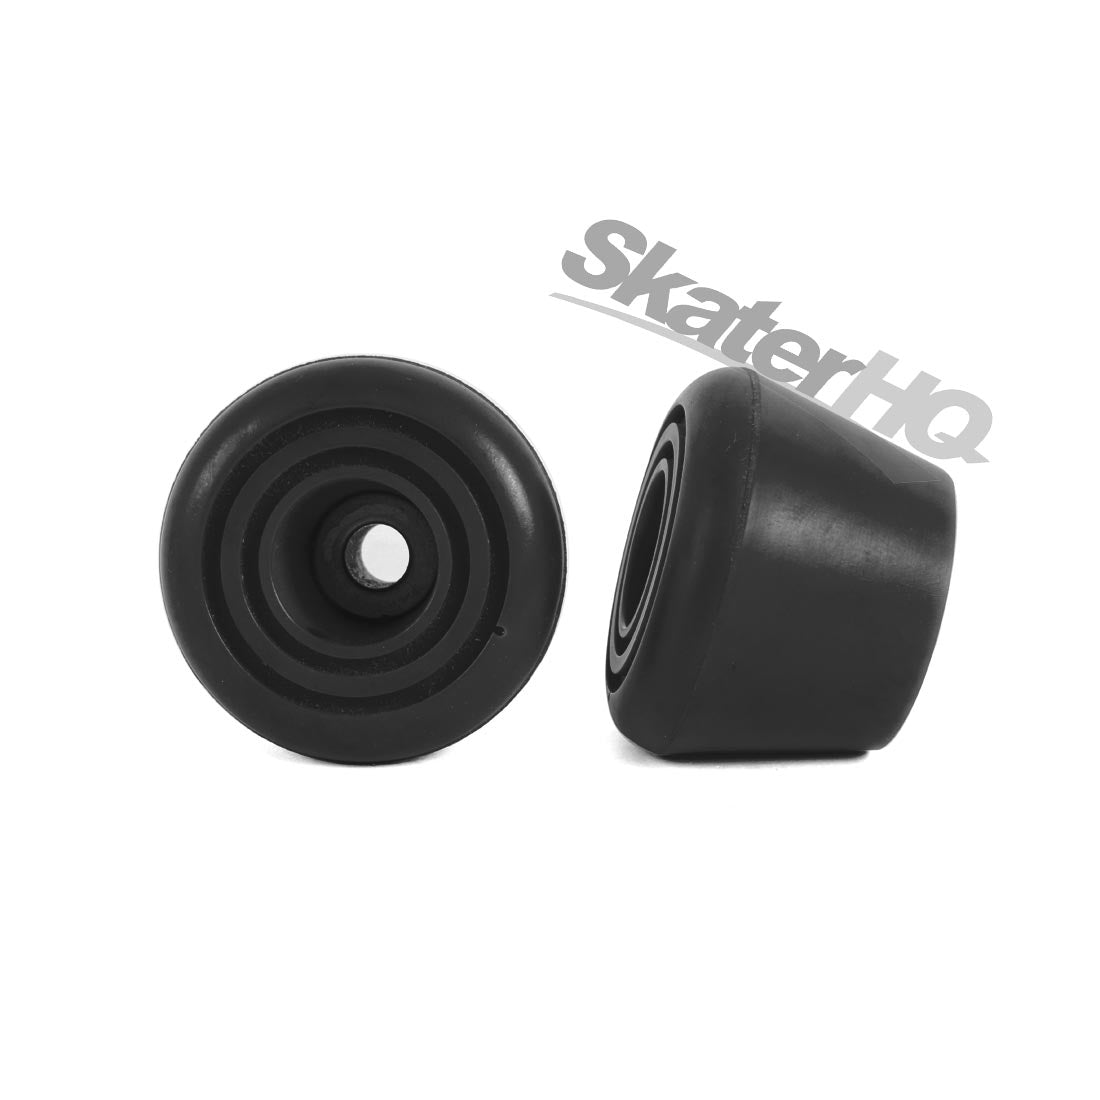 Roller Skate High Bell Stoppers - Black Roller Skate Hardware and Parts